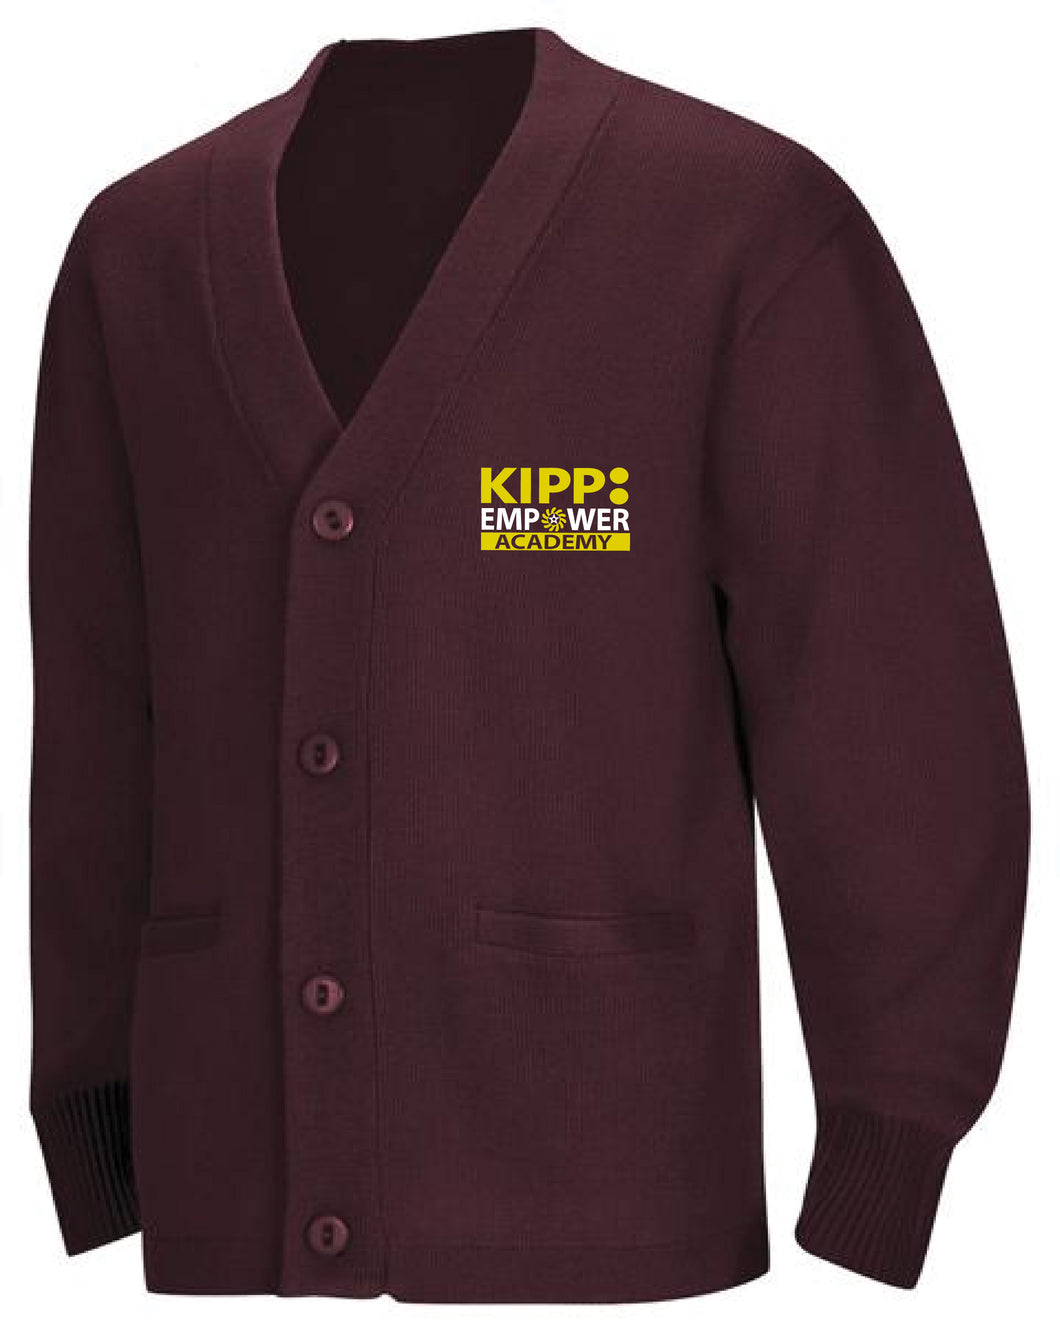 KIPP Empower Cardigan